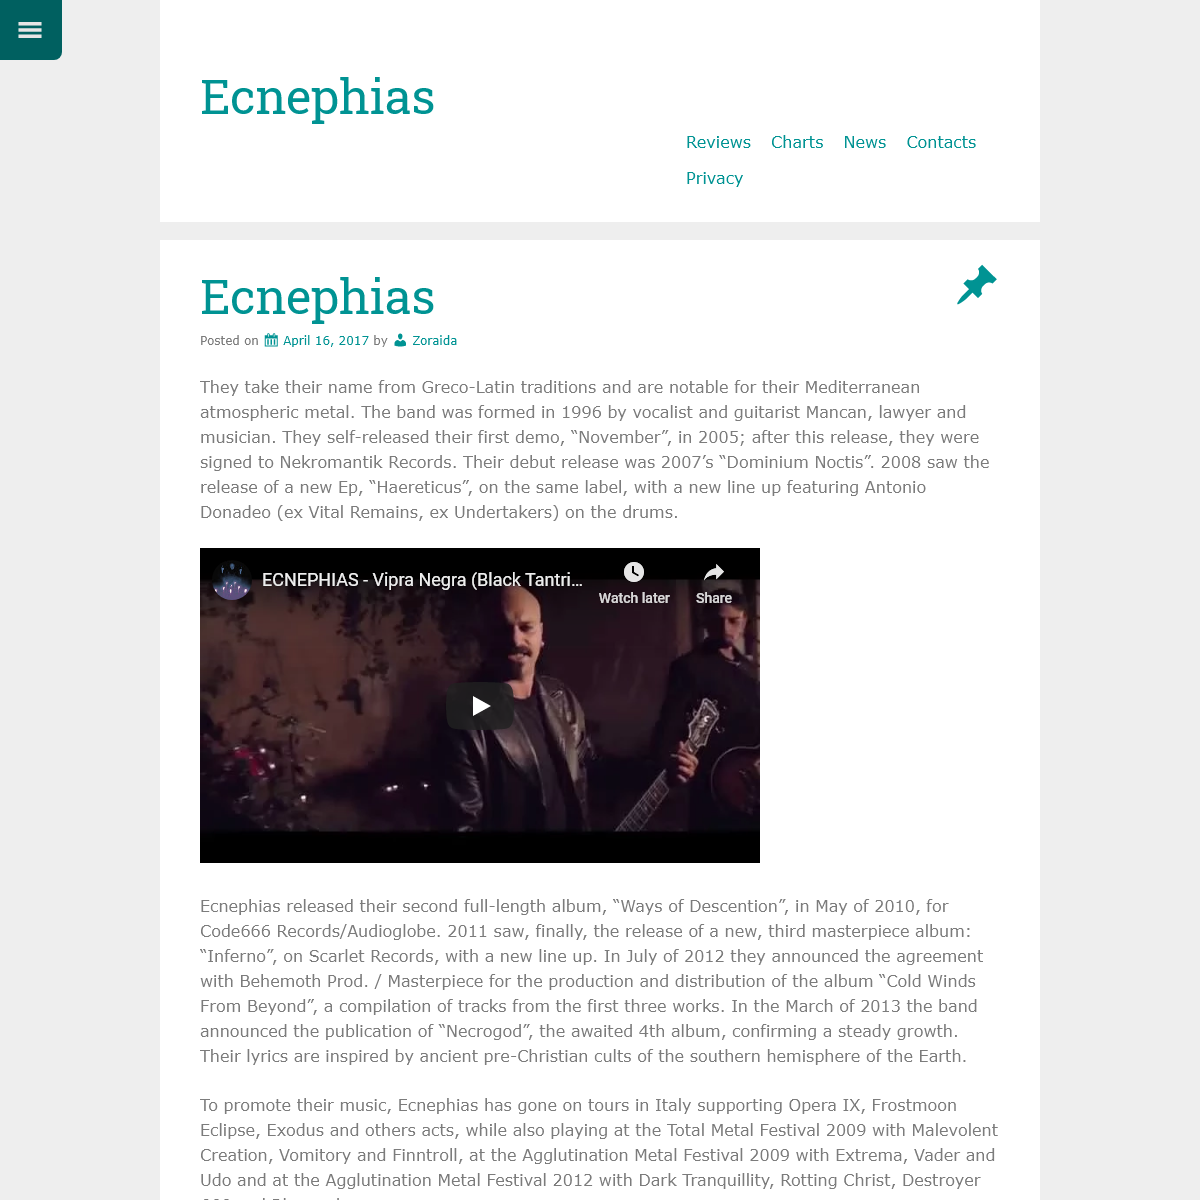 A complete backup of ecnephias.com